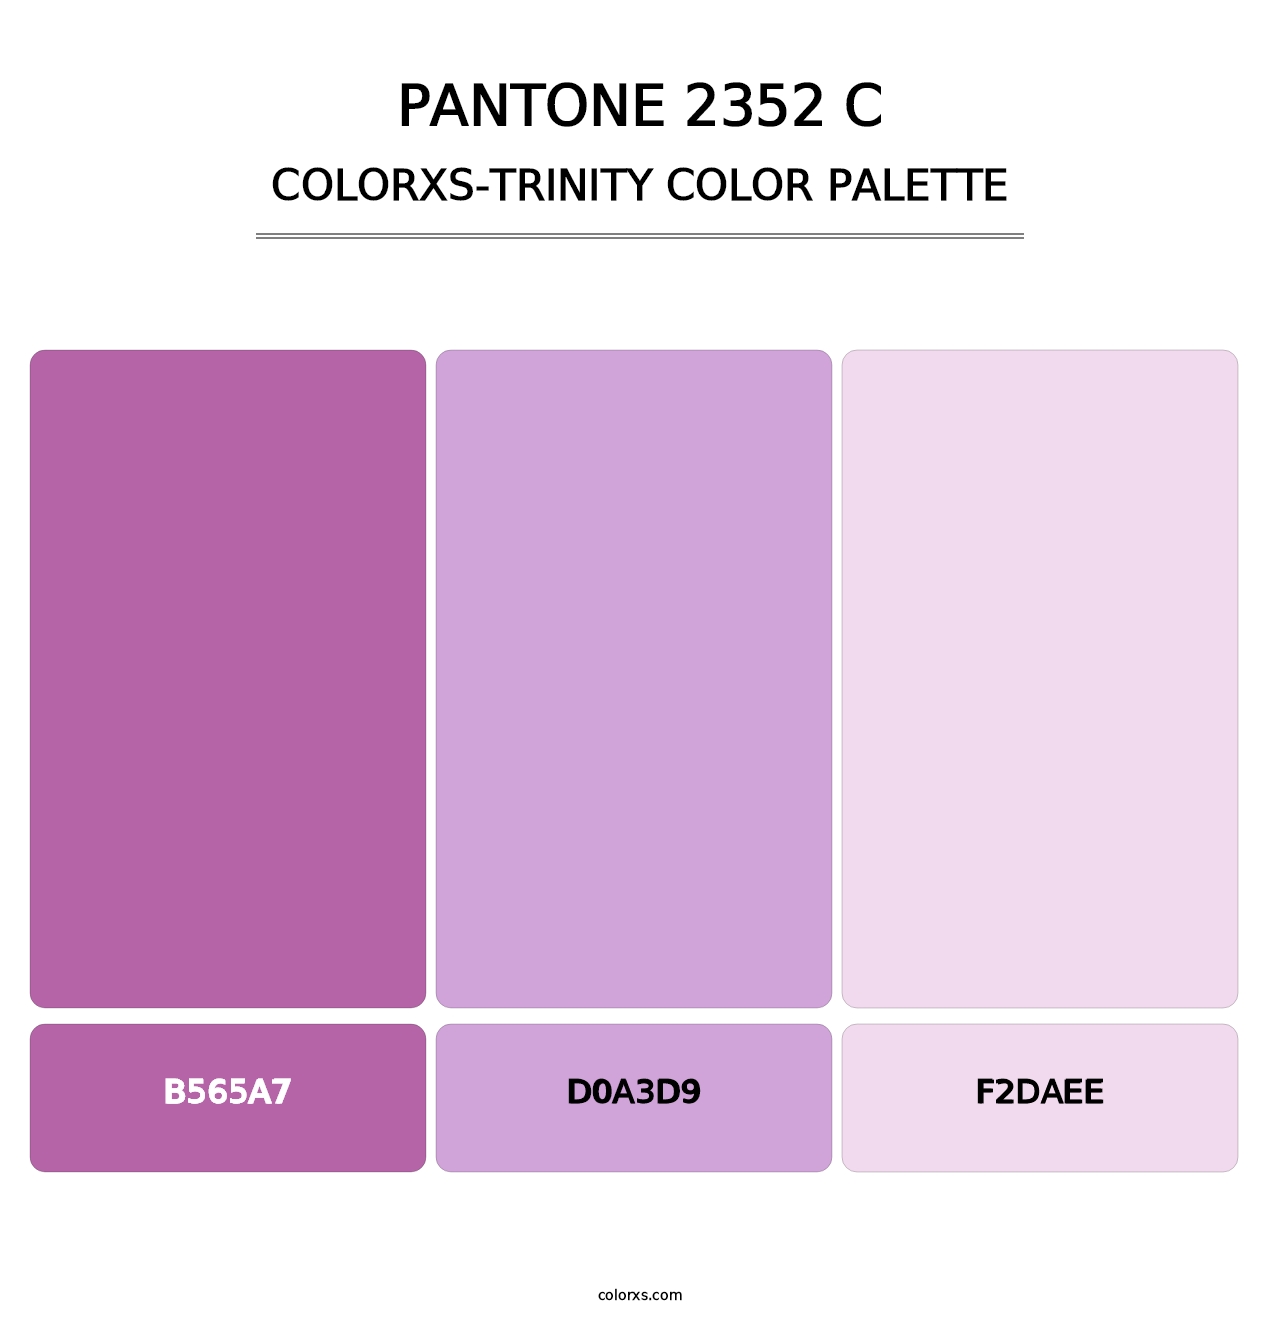 PANTONE 2352 C - Colorxs Trinity Palette